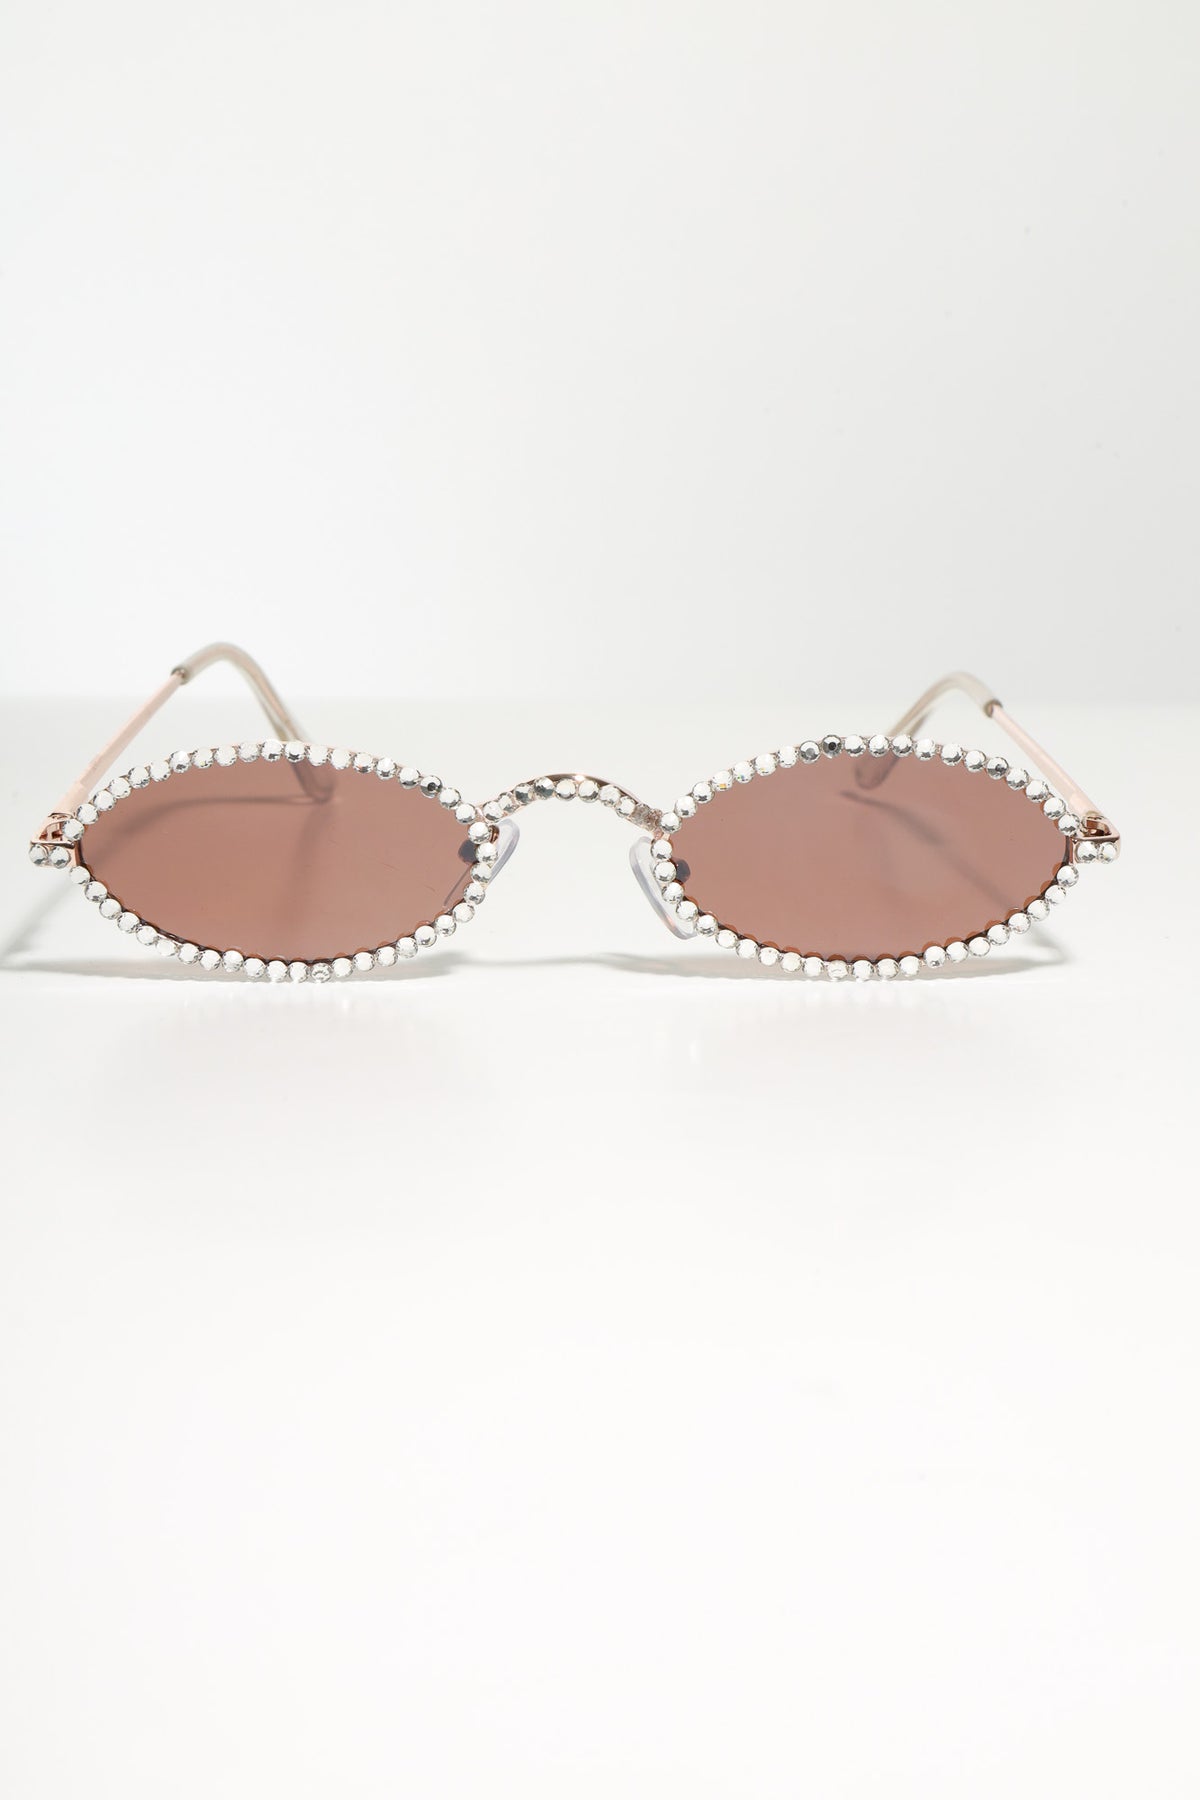 
              Those Eyes Rhinestone Studded Sunglasses - Brown - Swank A Posh
            